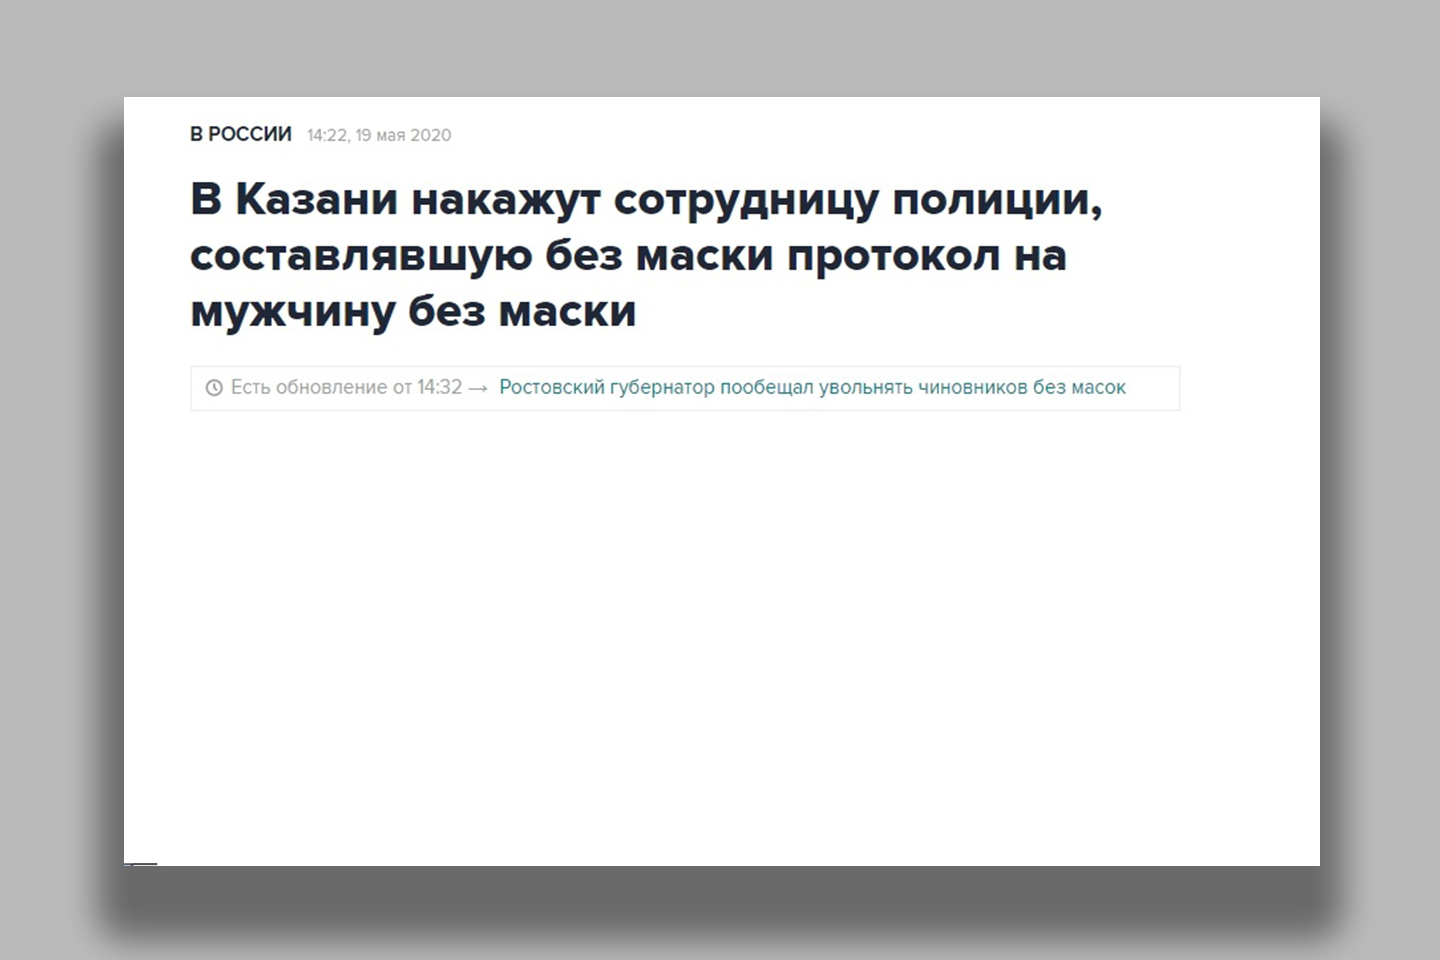 Скрин www.interfax.ru